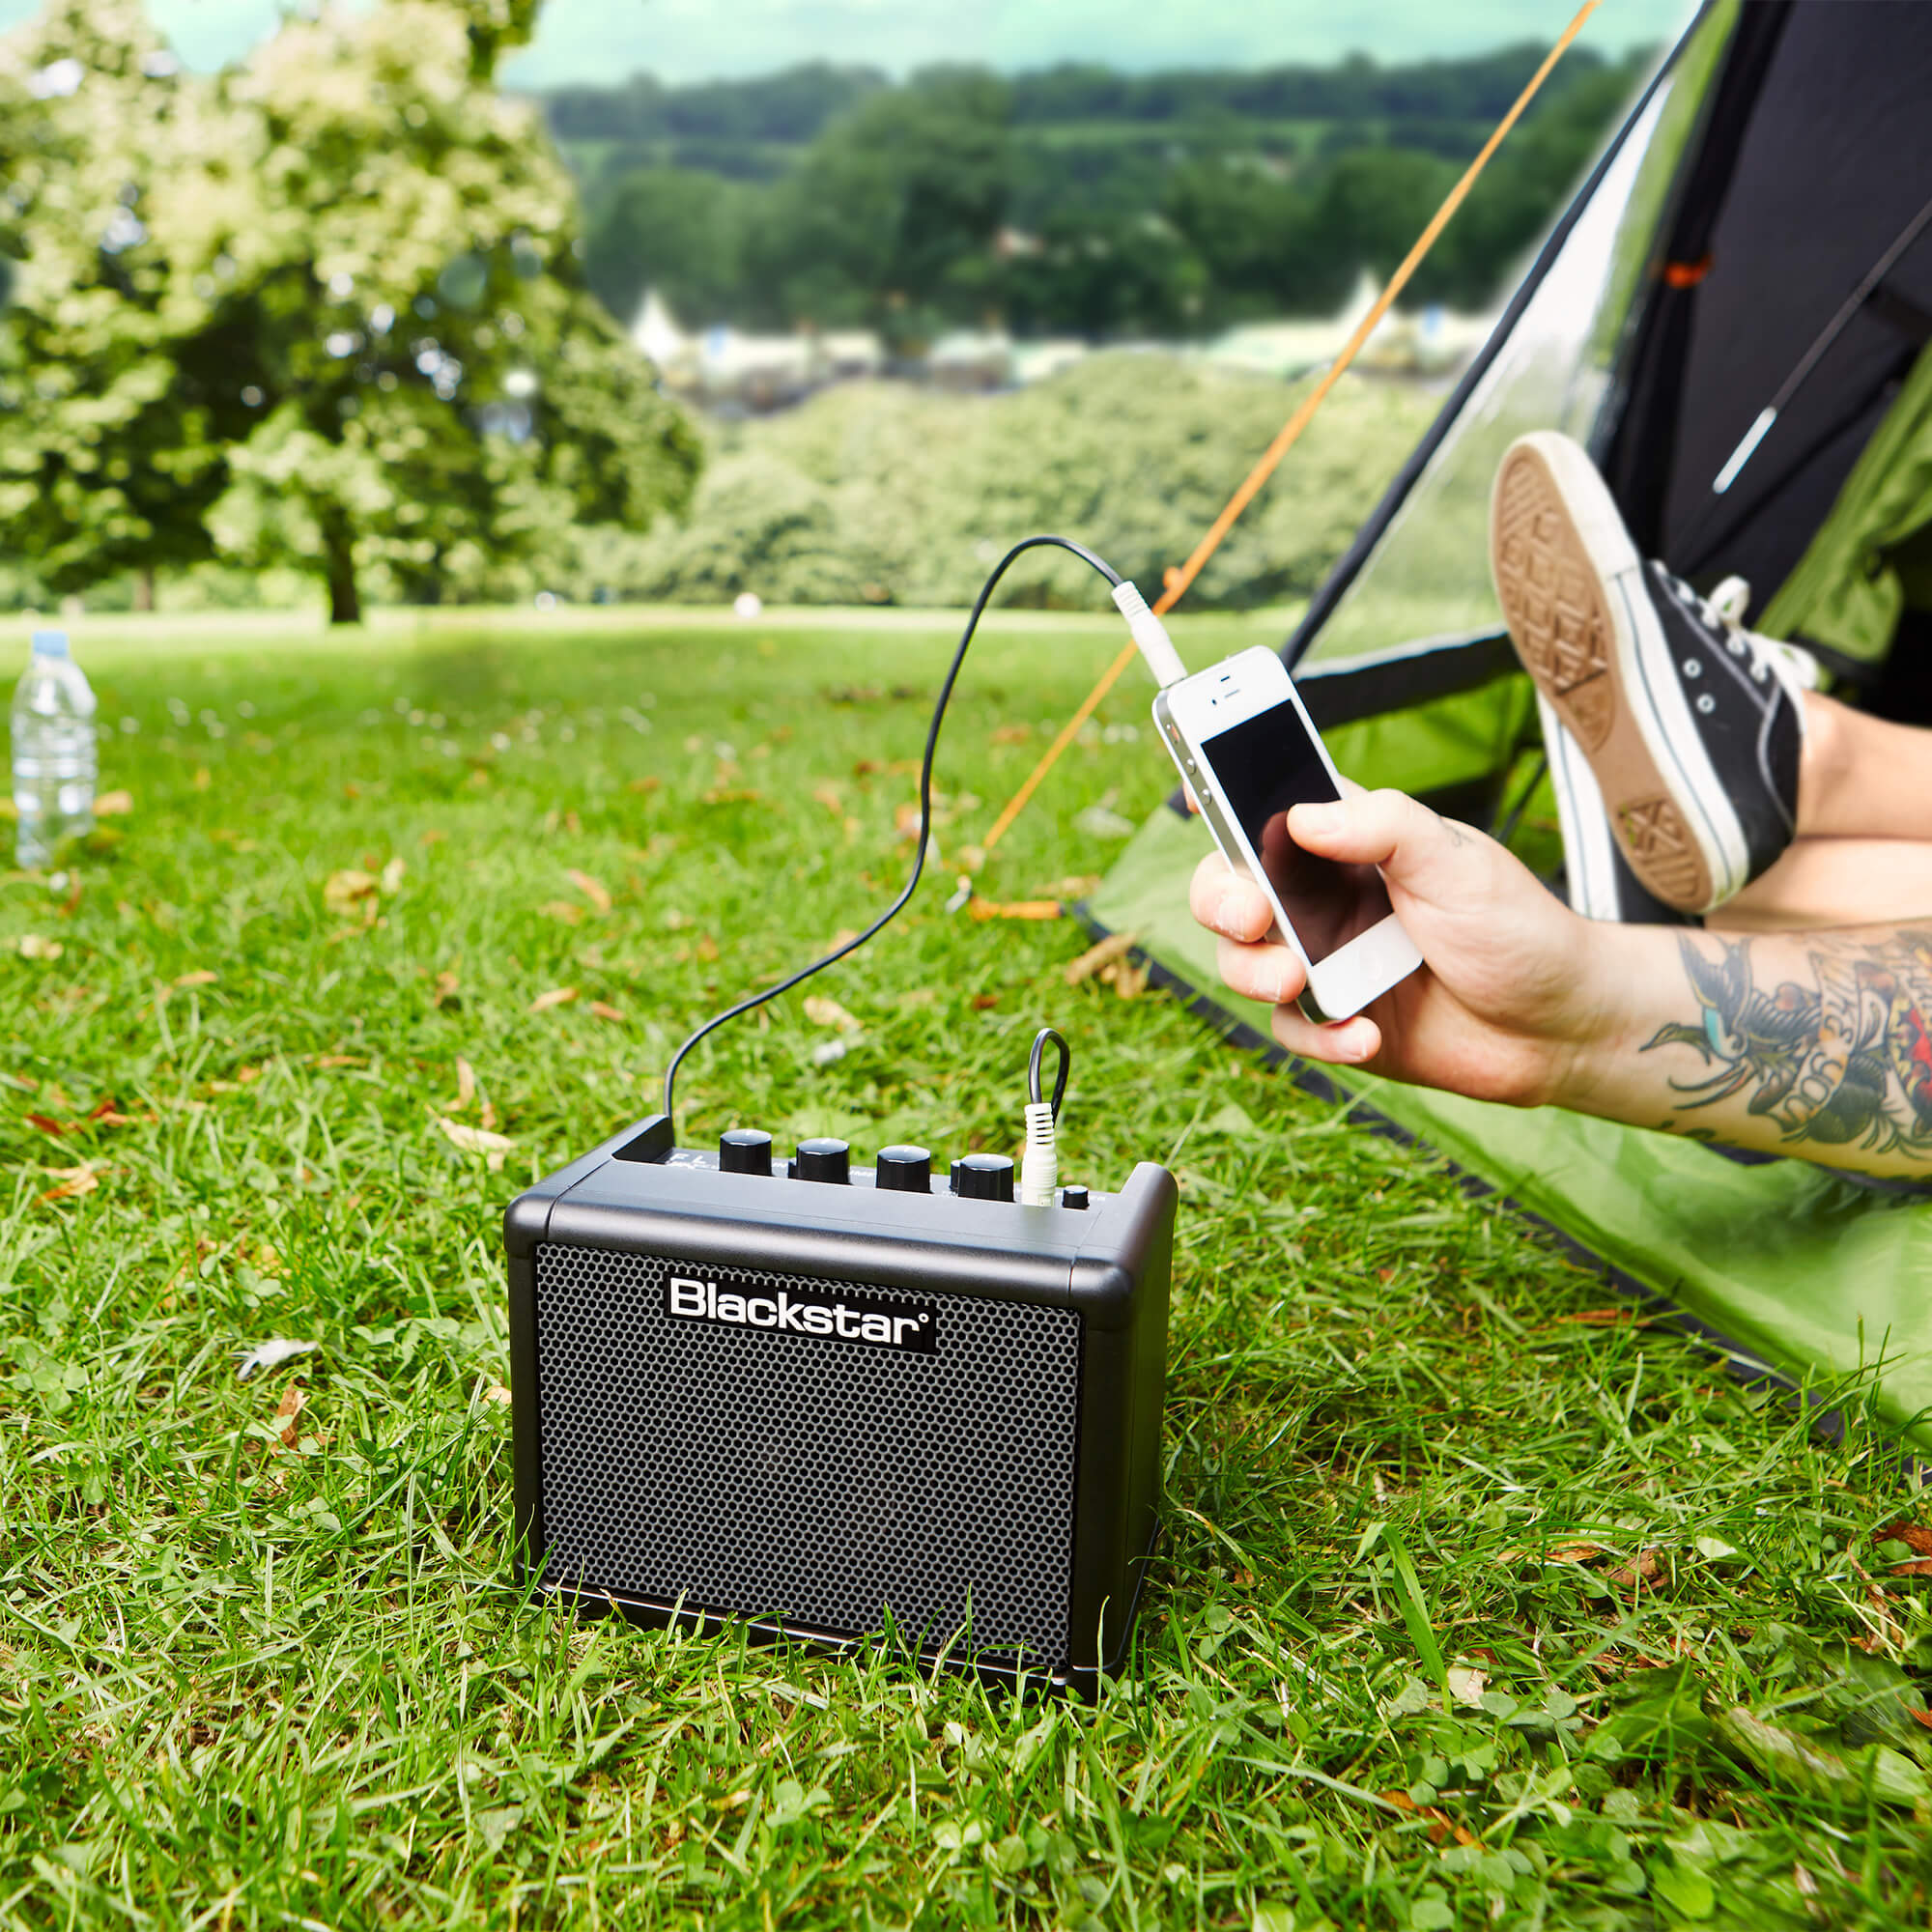 Blackstar Amps FLY 3 bass mini amplifier outdoors camping